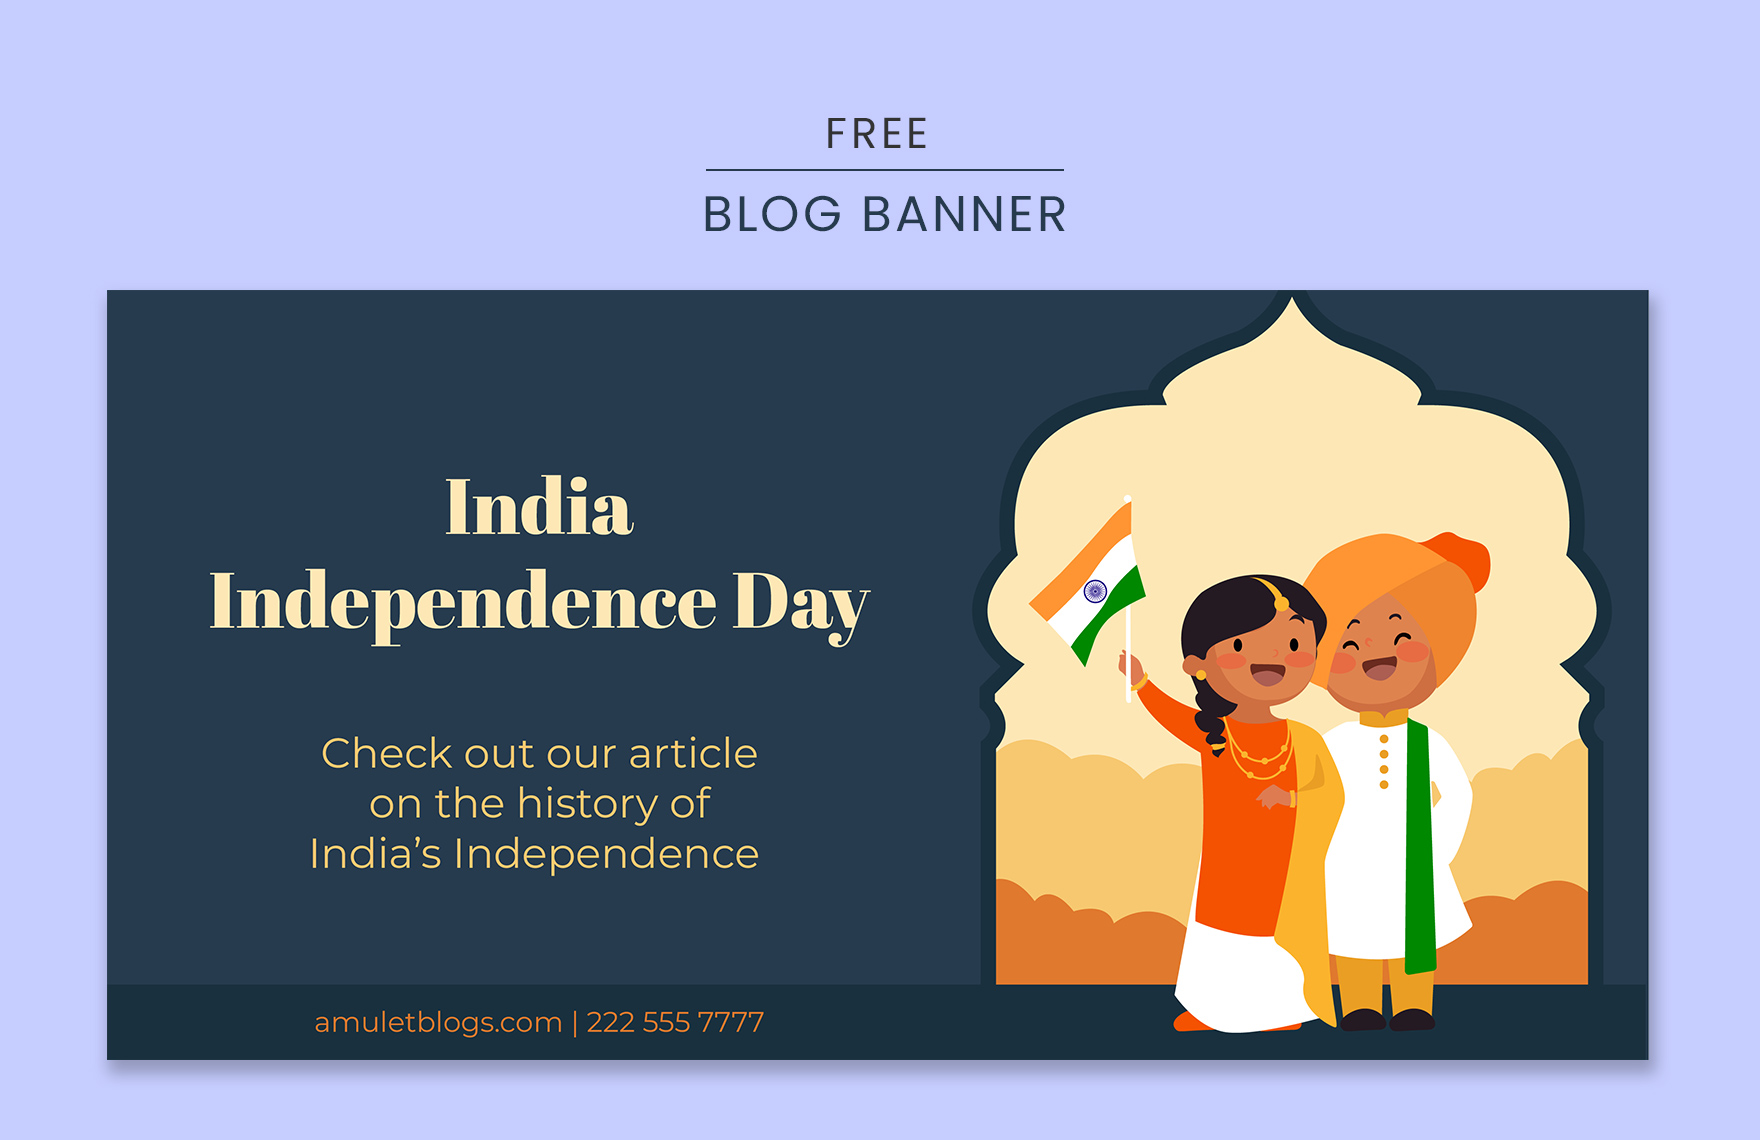 Free India Independence Day Blog Banner Template in PDF, Illustrator, SVG, JPEG